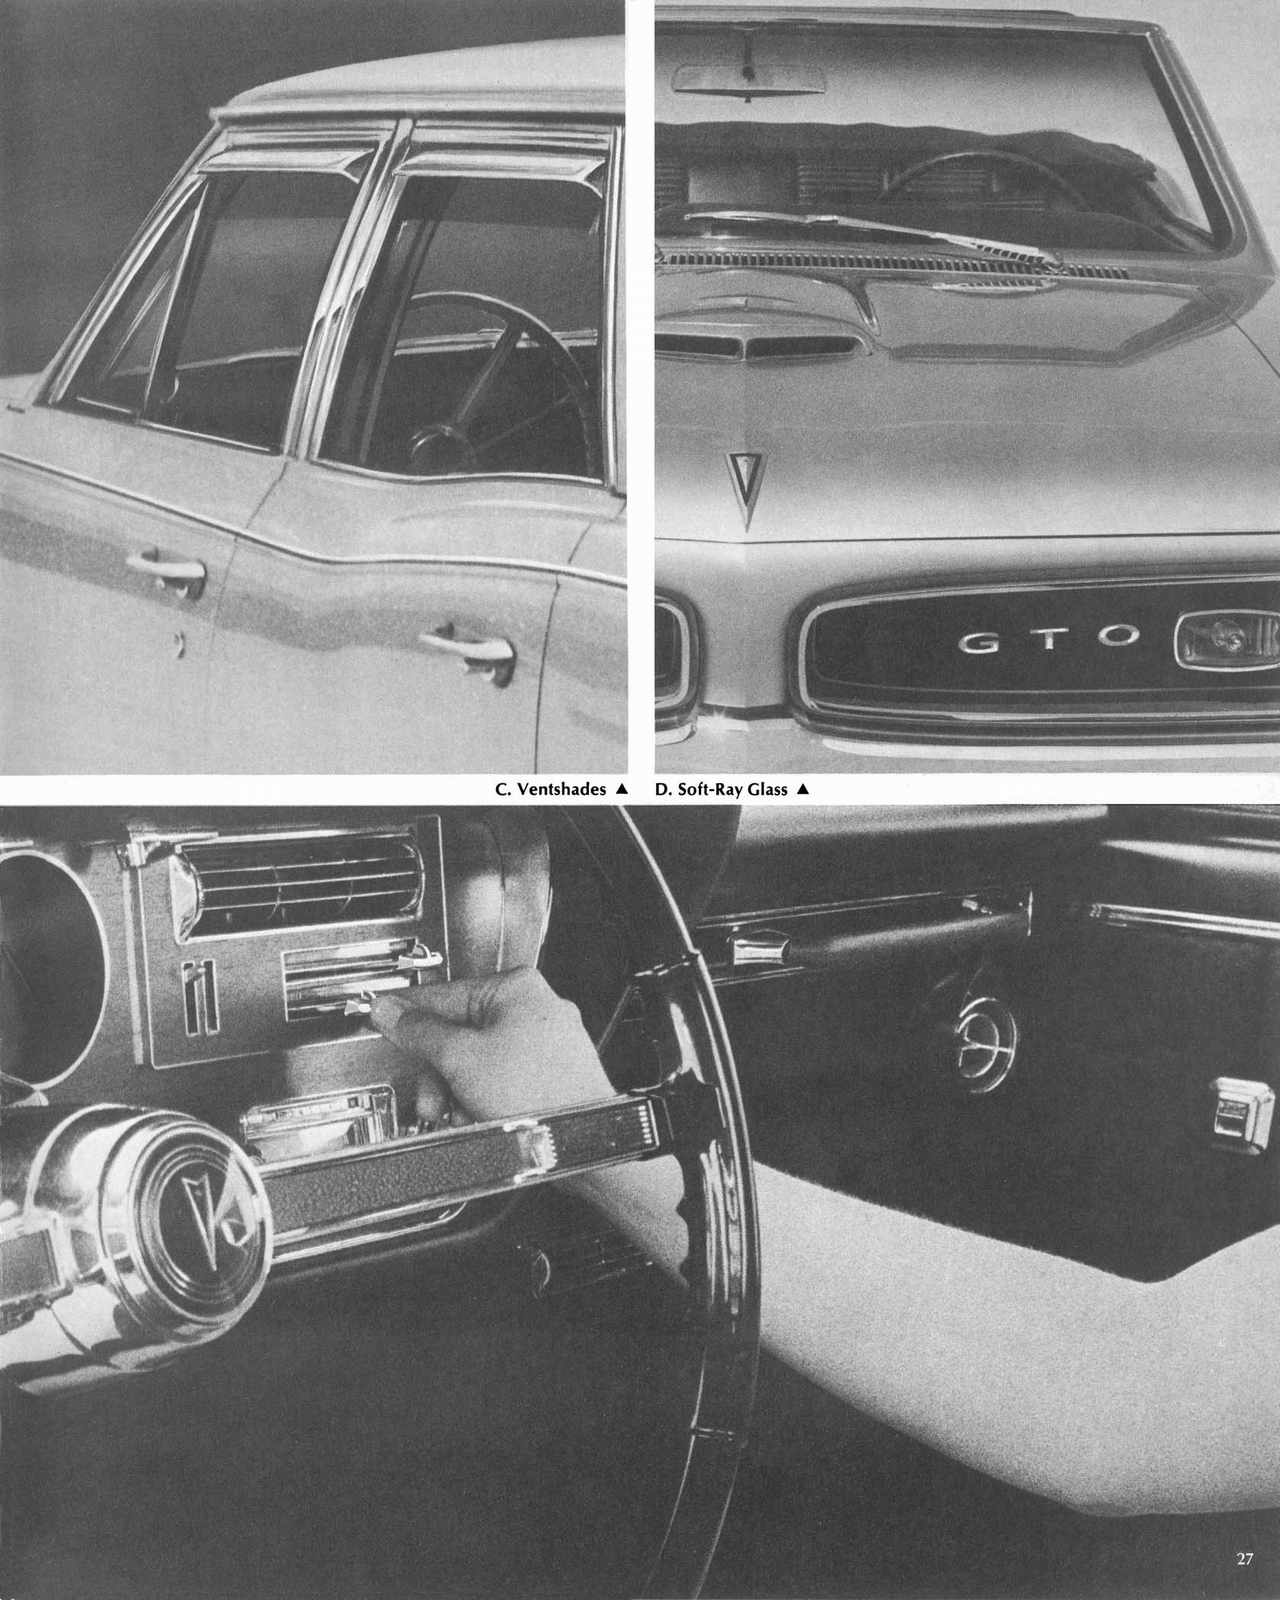 n_1966 Pontiac Accessories Catalog-27.jpg